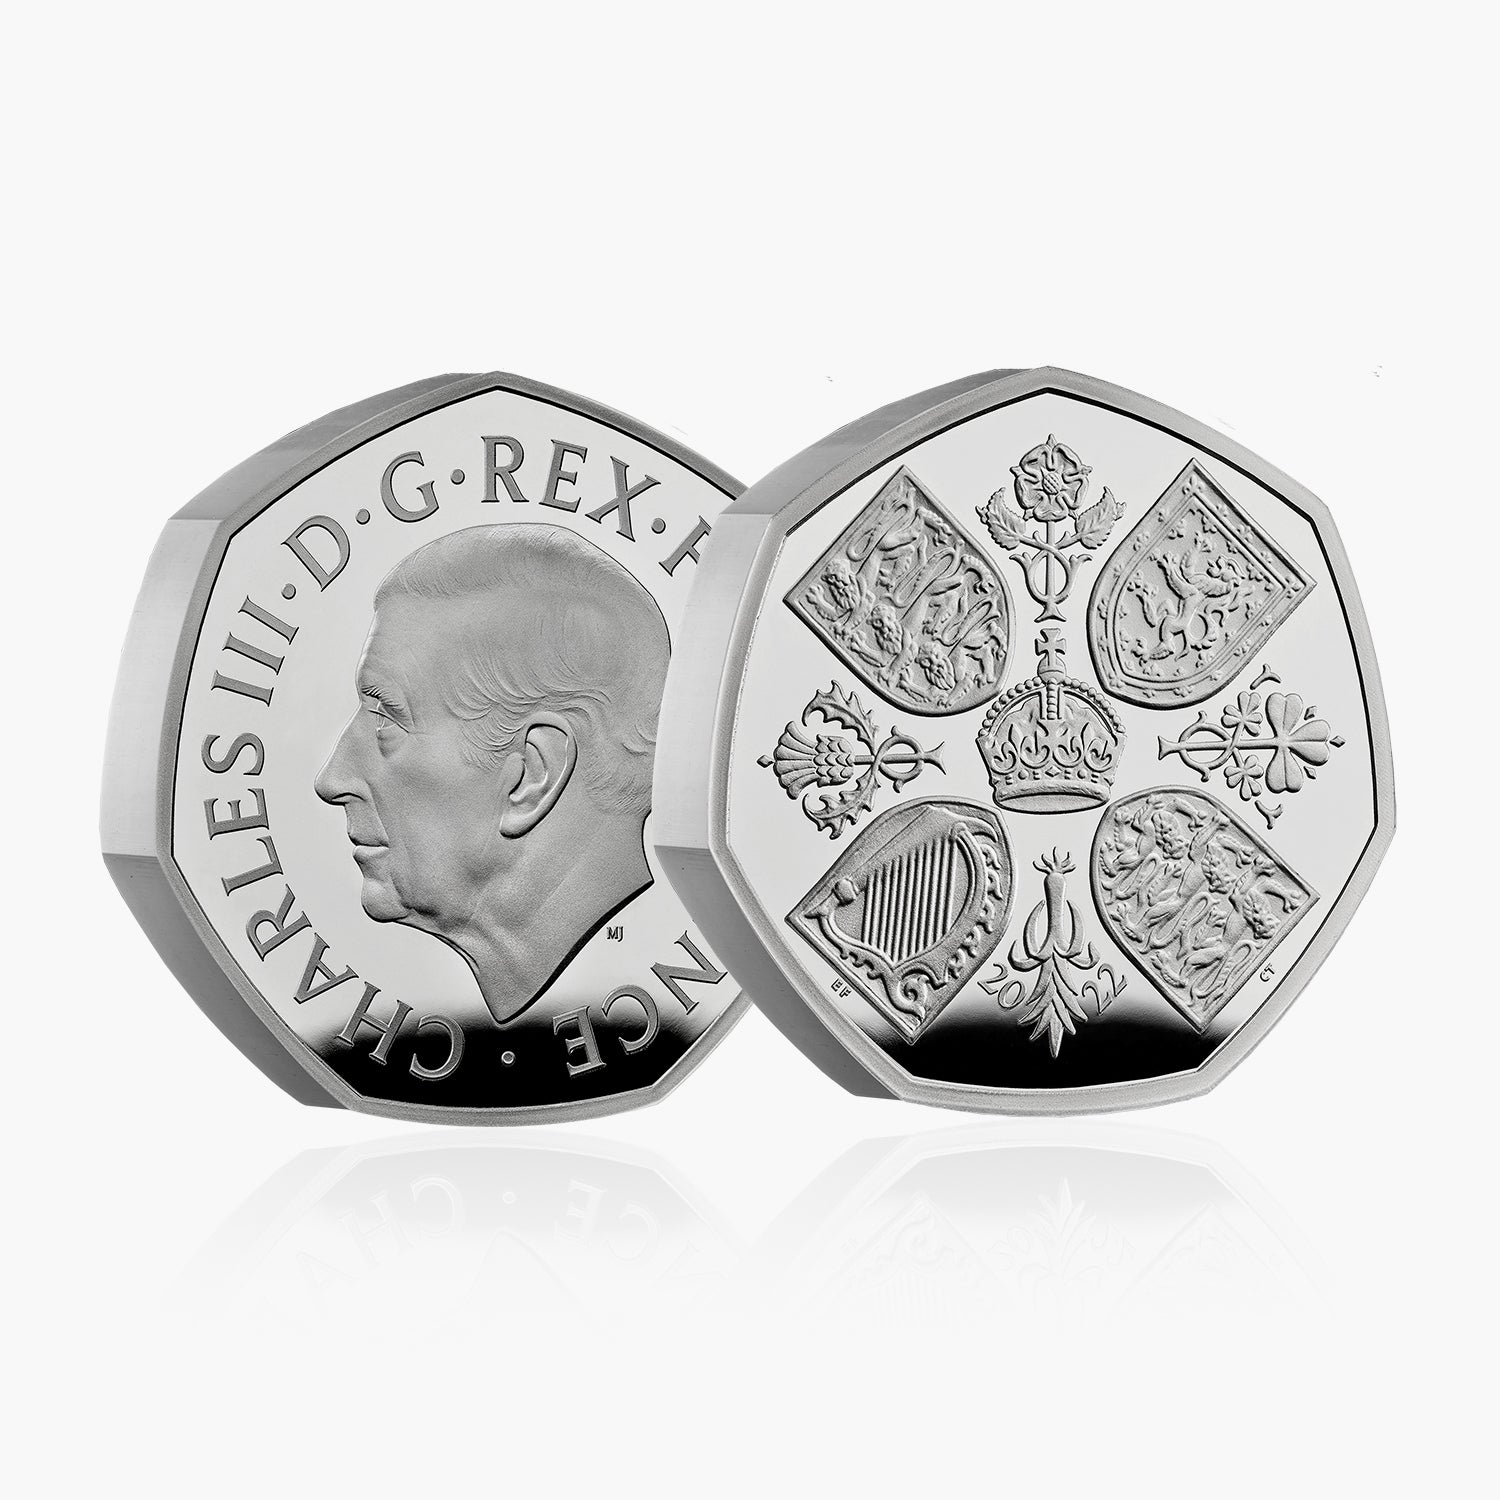 Her Majesty Queen Elizabeth II 2022 50p Silver Piedfort Coin - King Charles III first portrait